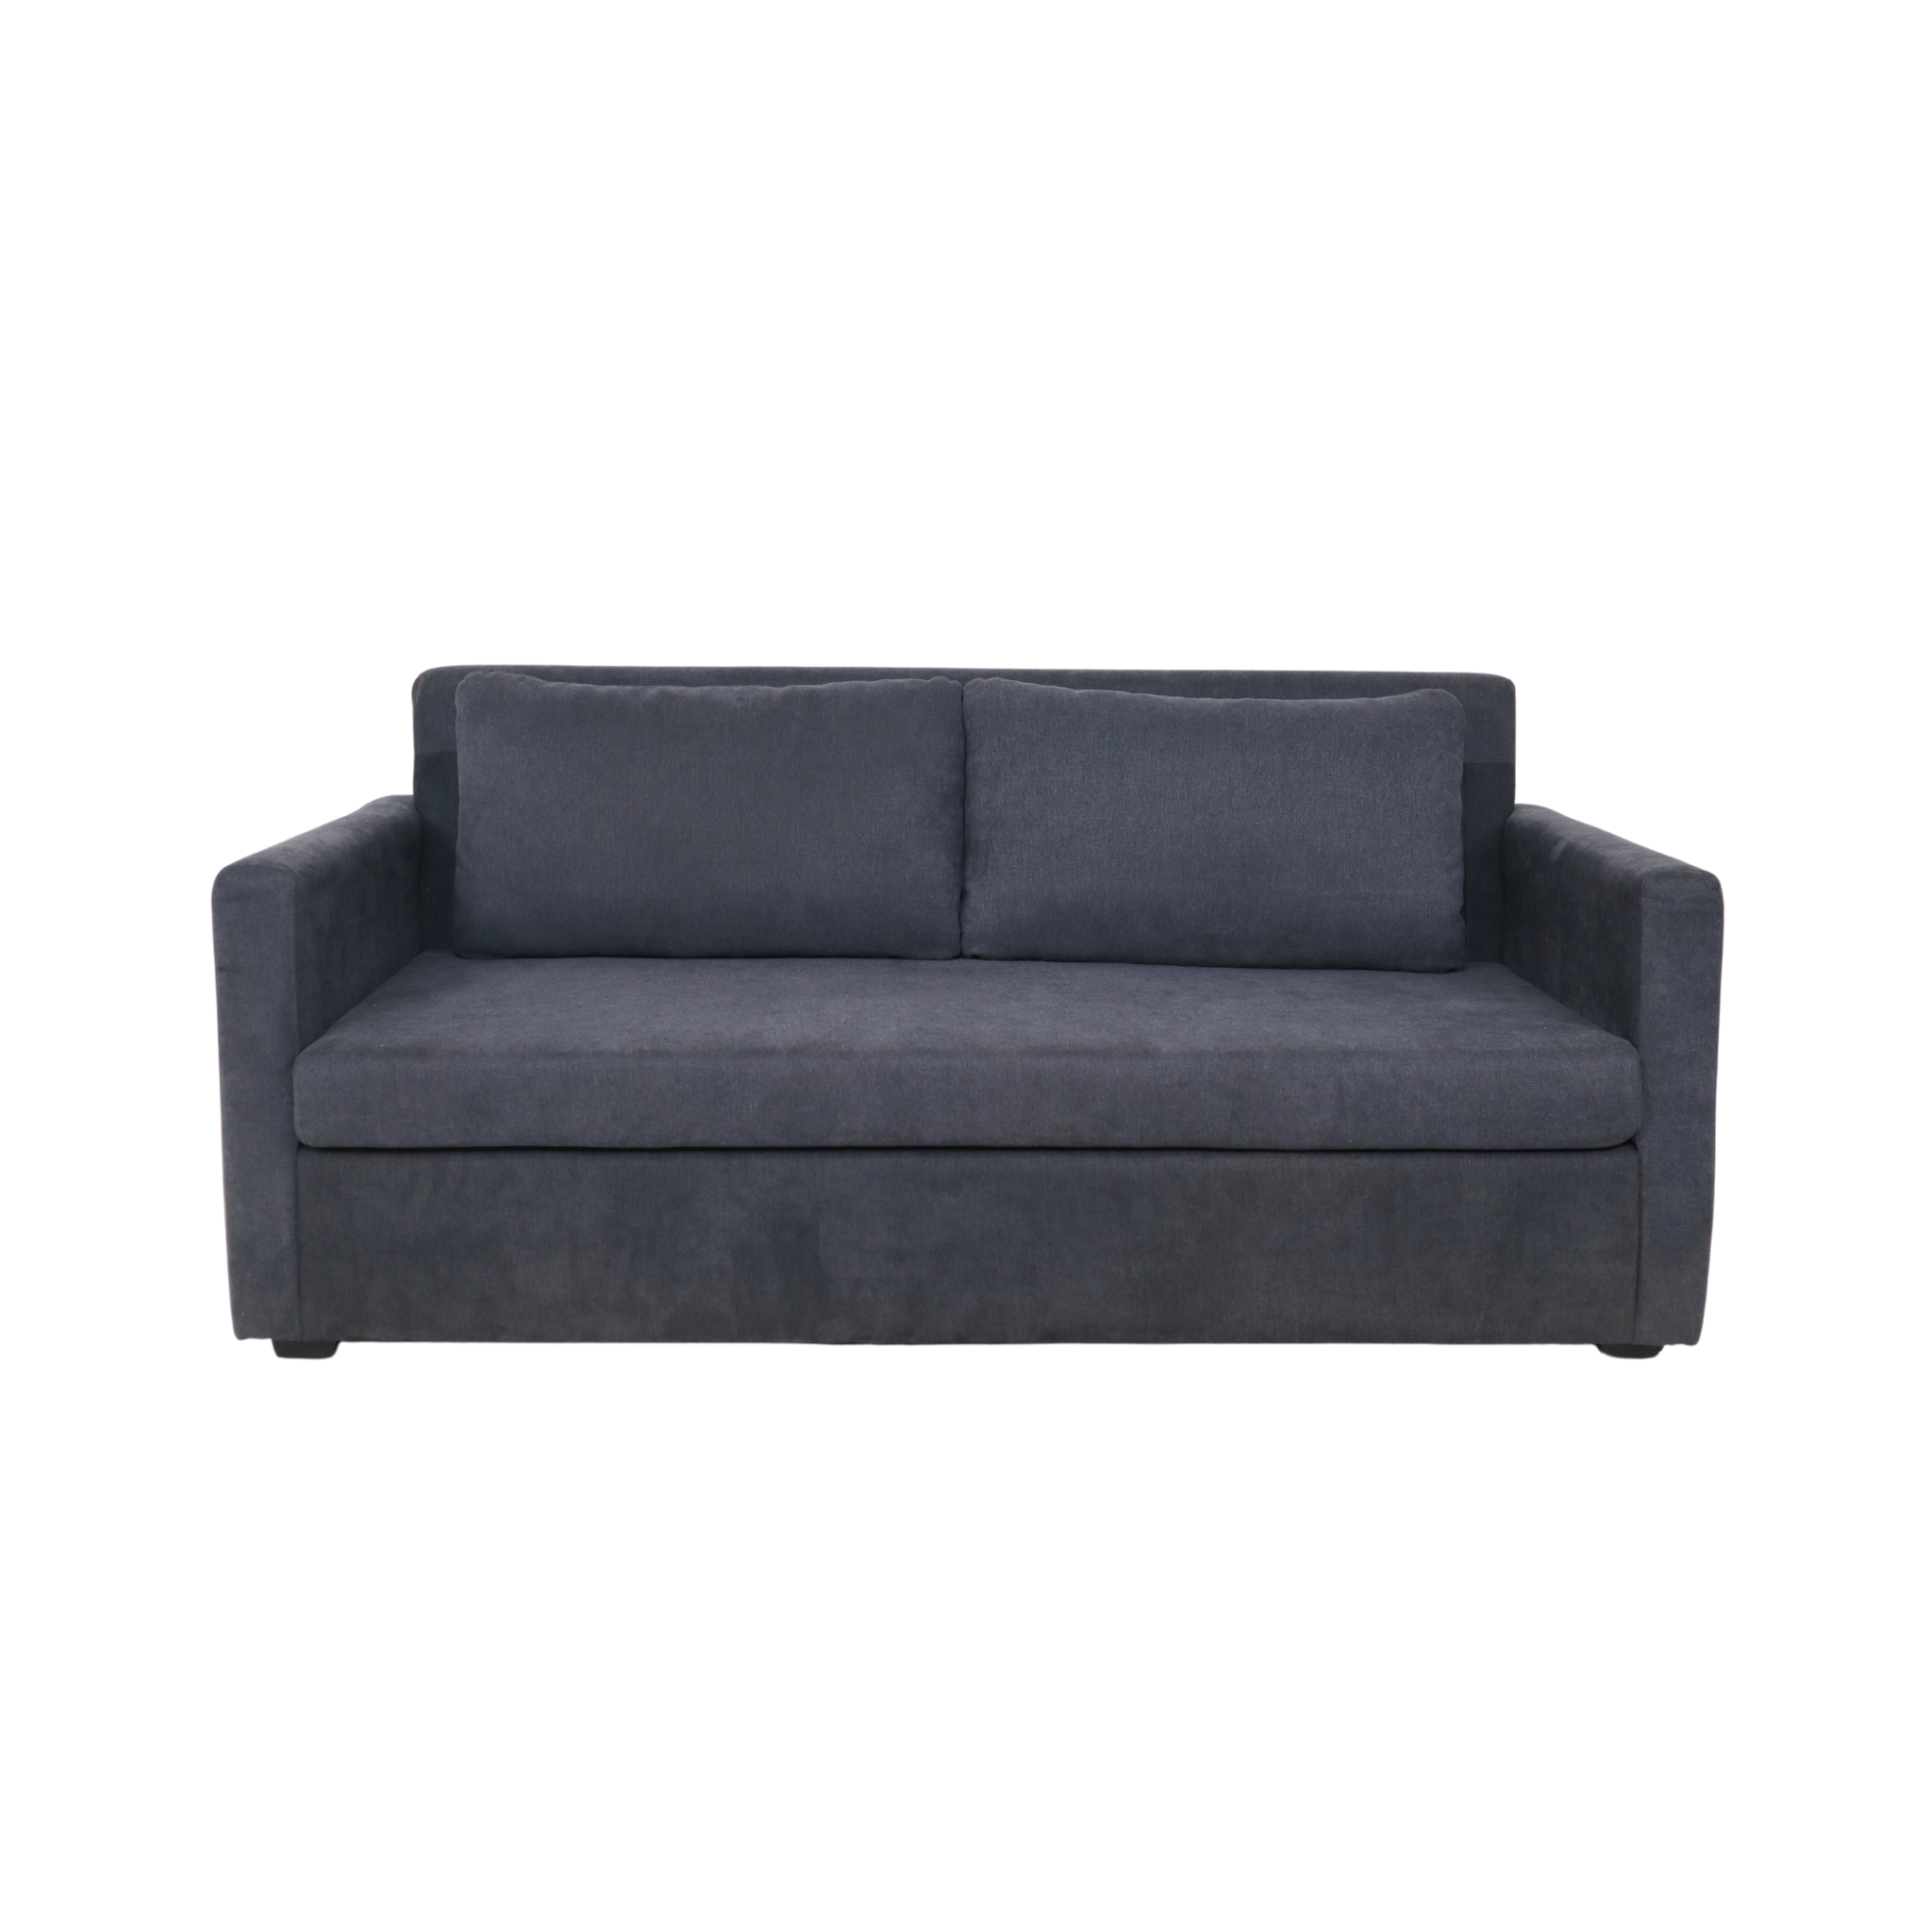 ARMANDO Sofa Bed Affordahome Furniture